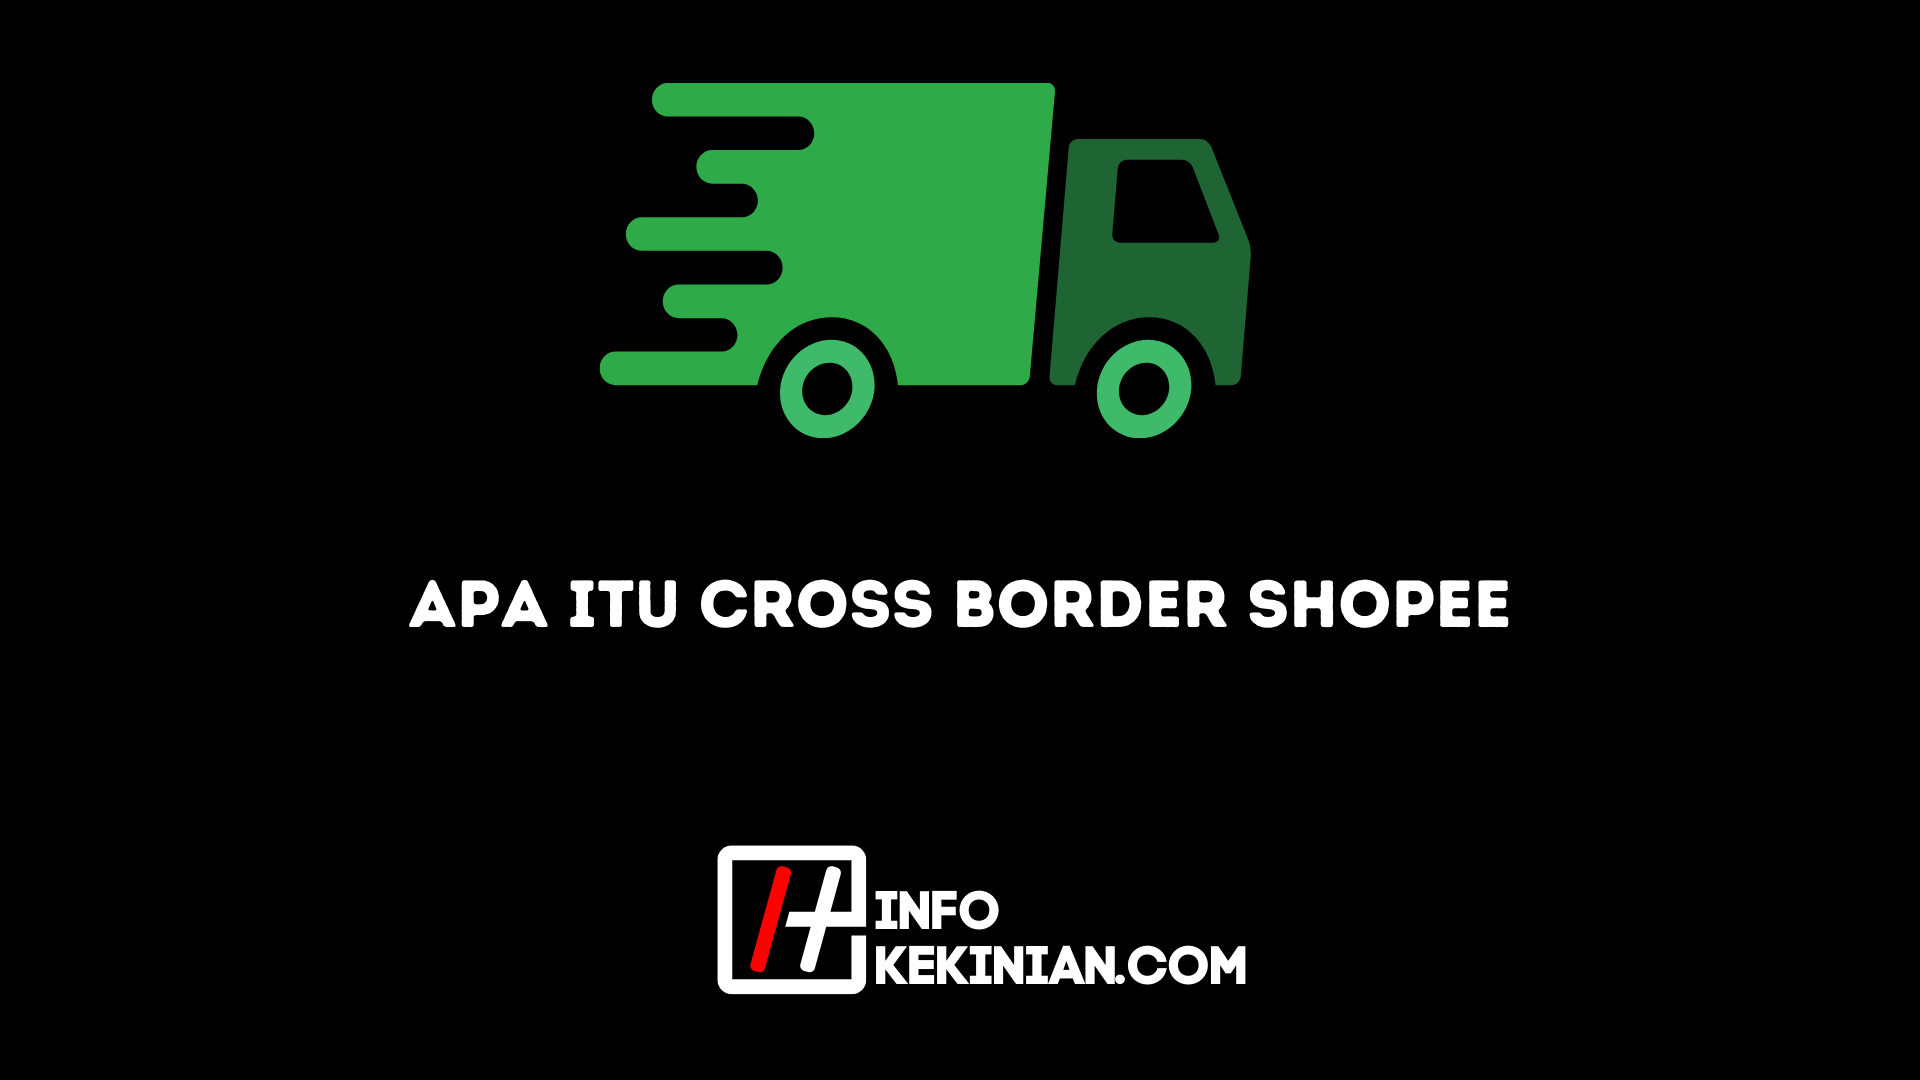 Apa itu Cross Border Shopee, Ini Penjelasannya!